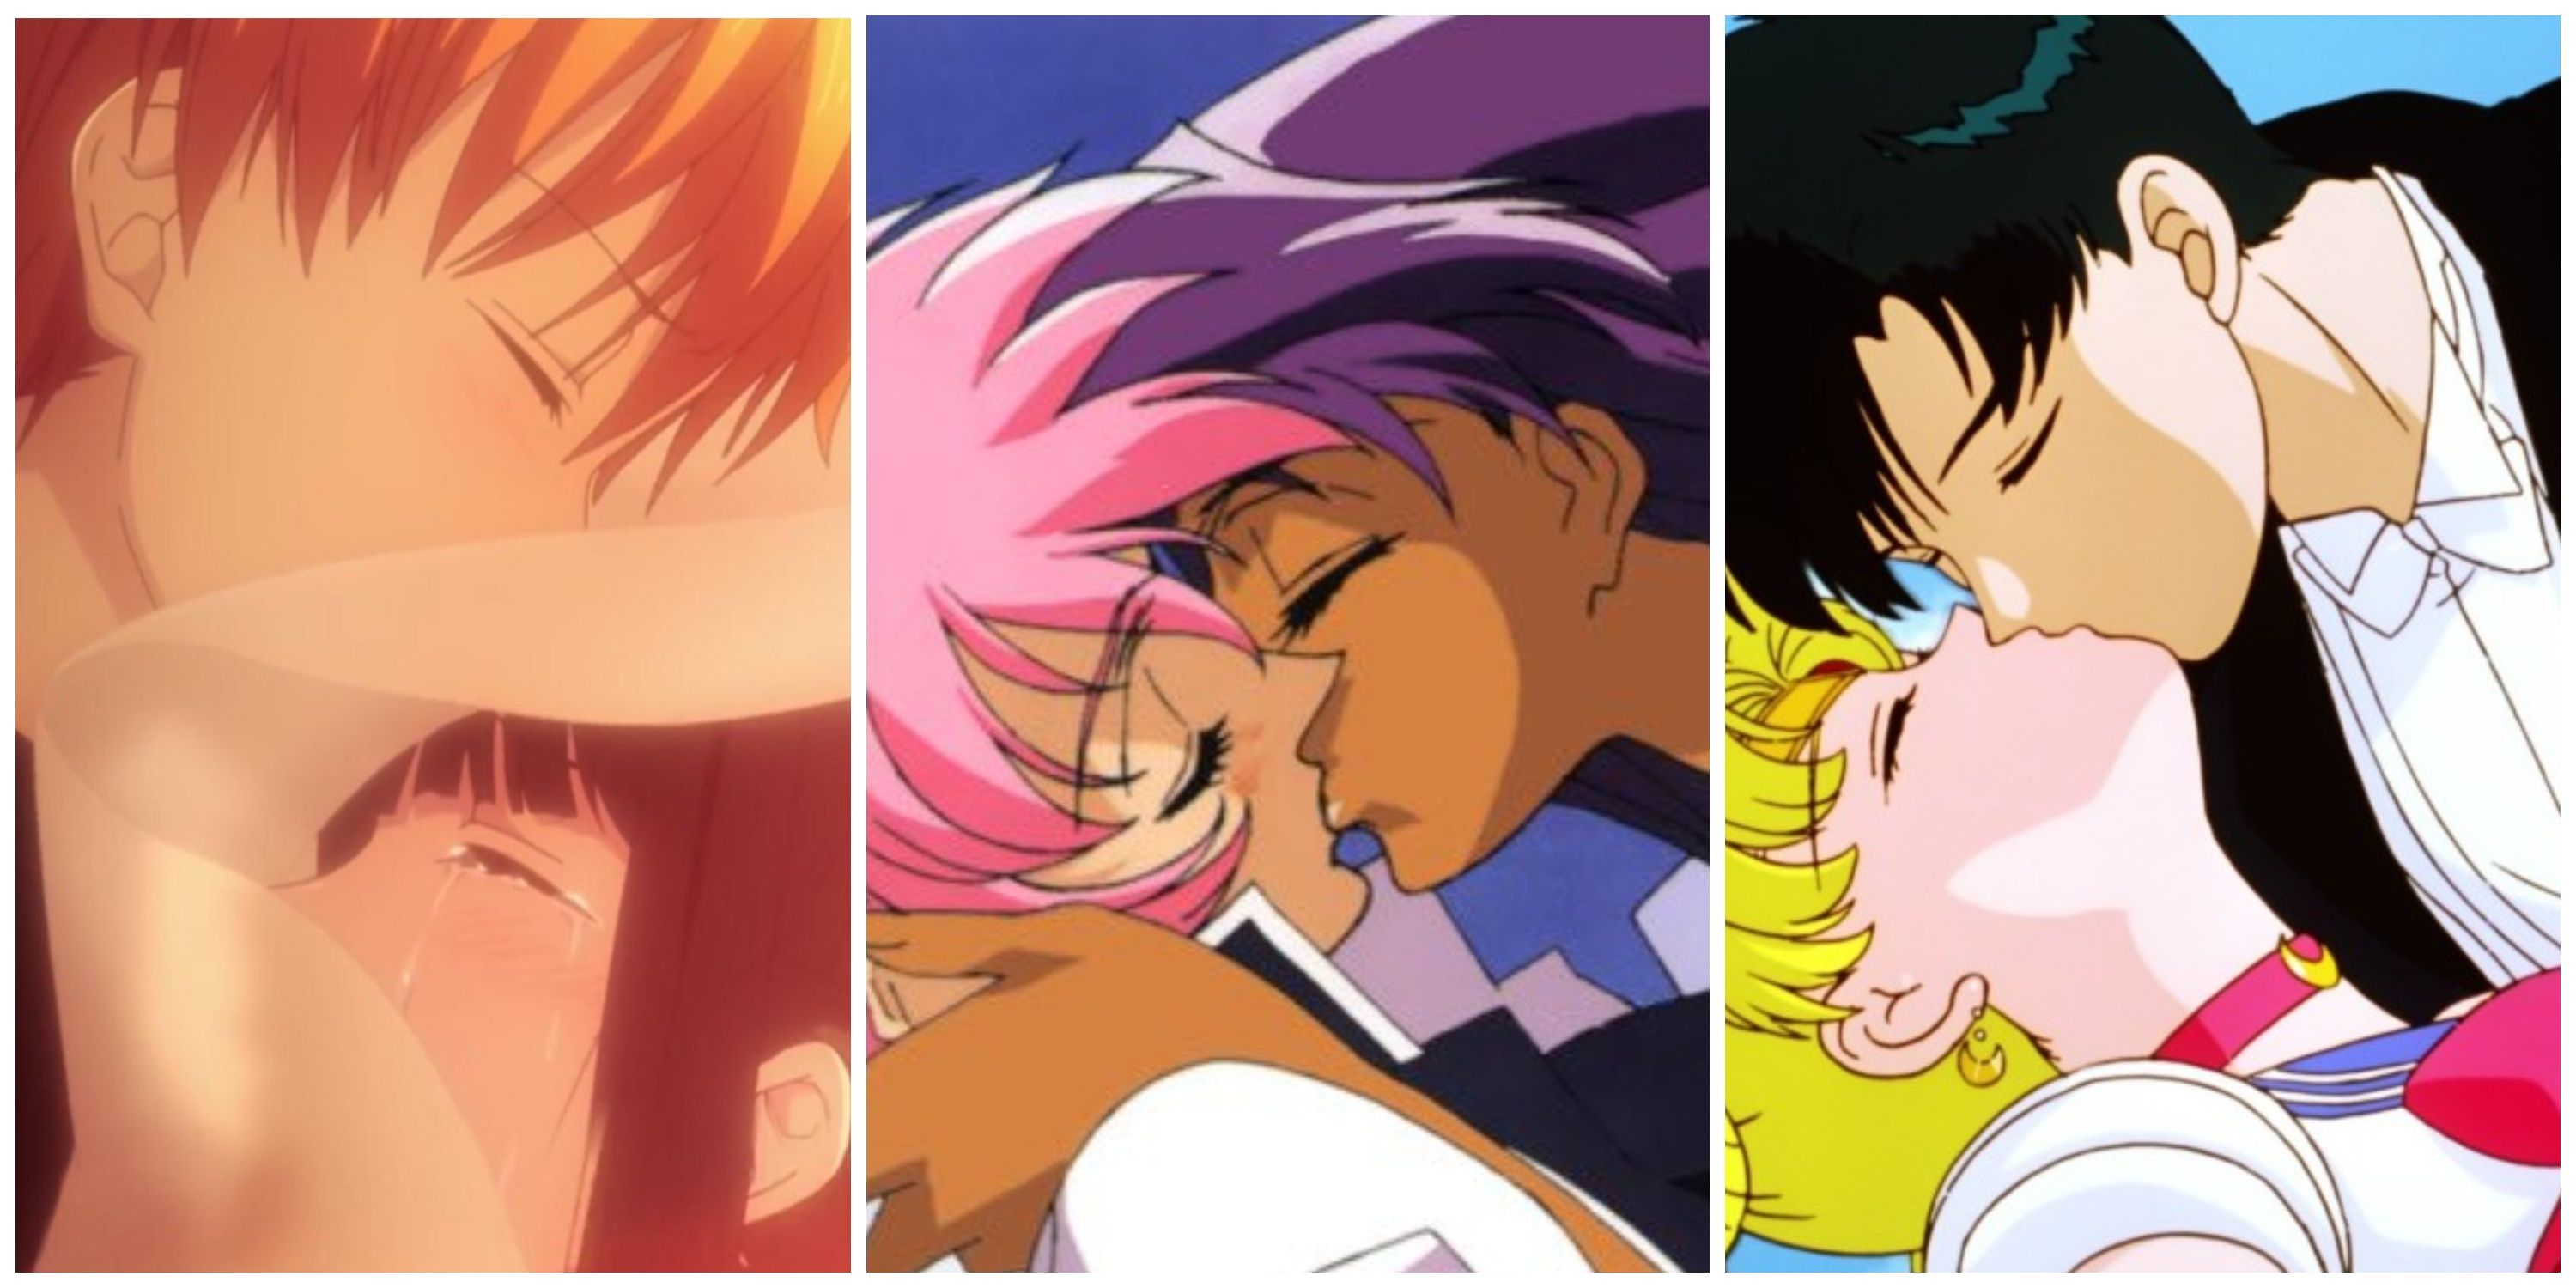 Love Doesn't Talk  Romantic anime, Romantic anime couples, Anime kiss